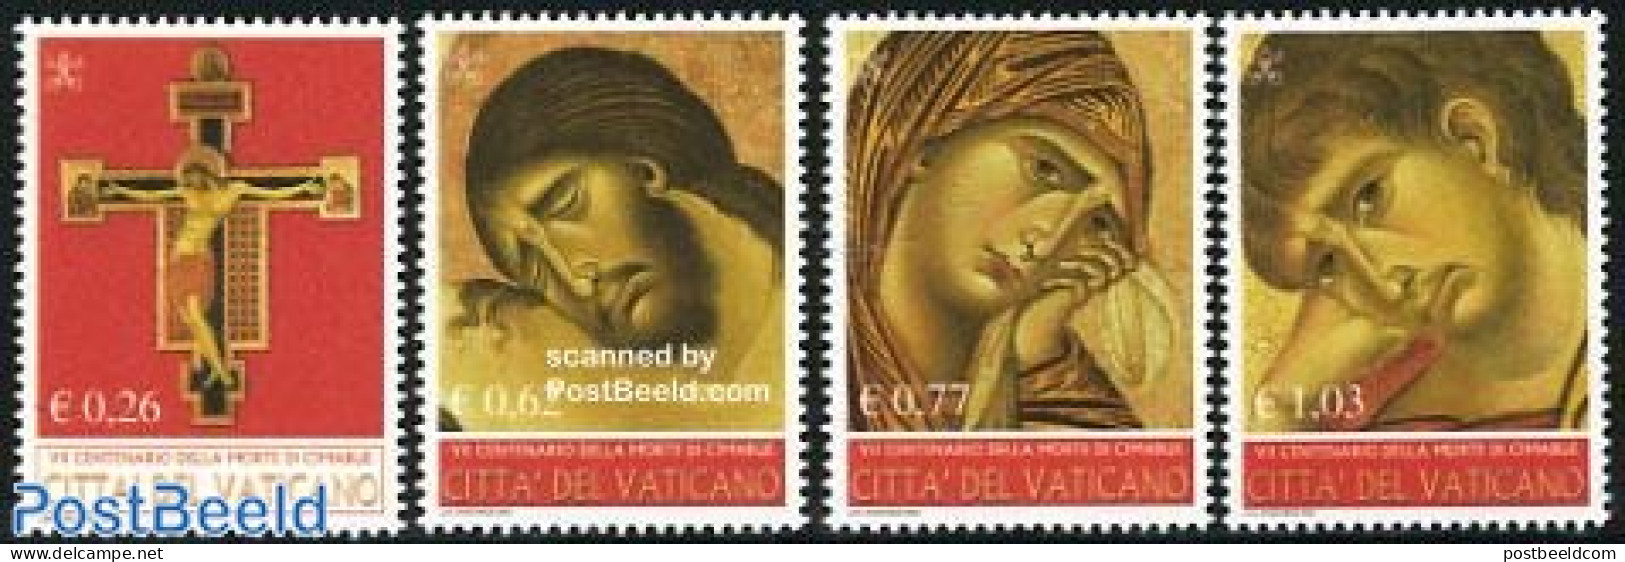 Vatican 2002 Cimabue 4v, Mint NH, Art - Paintings - Ongebruikt